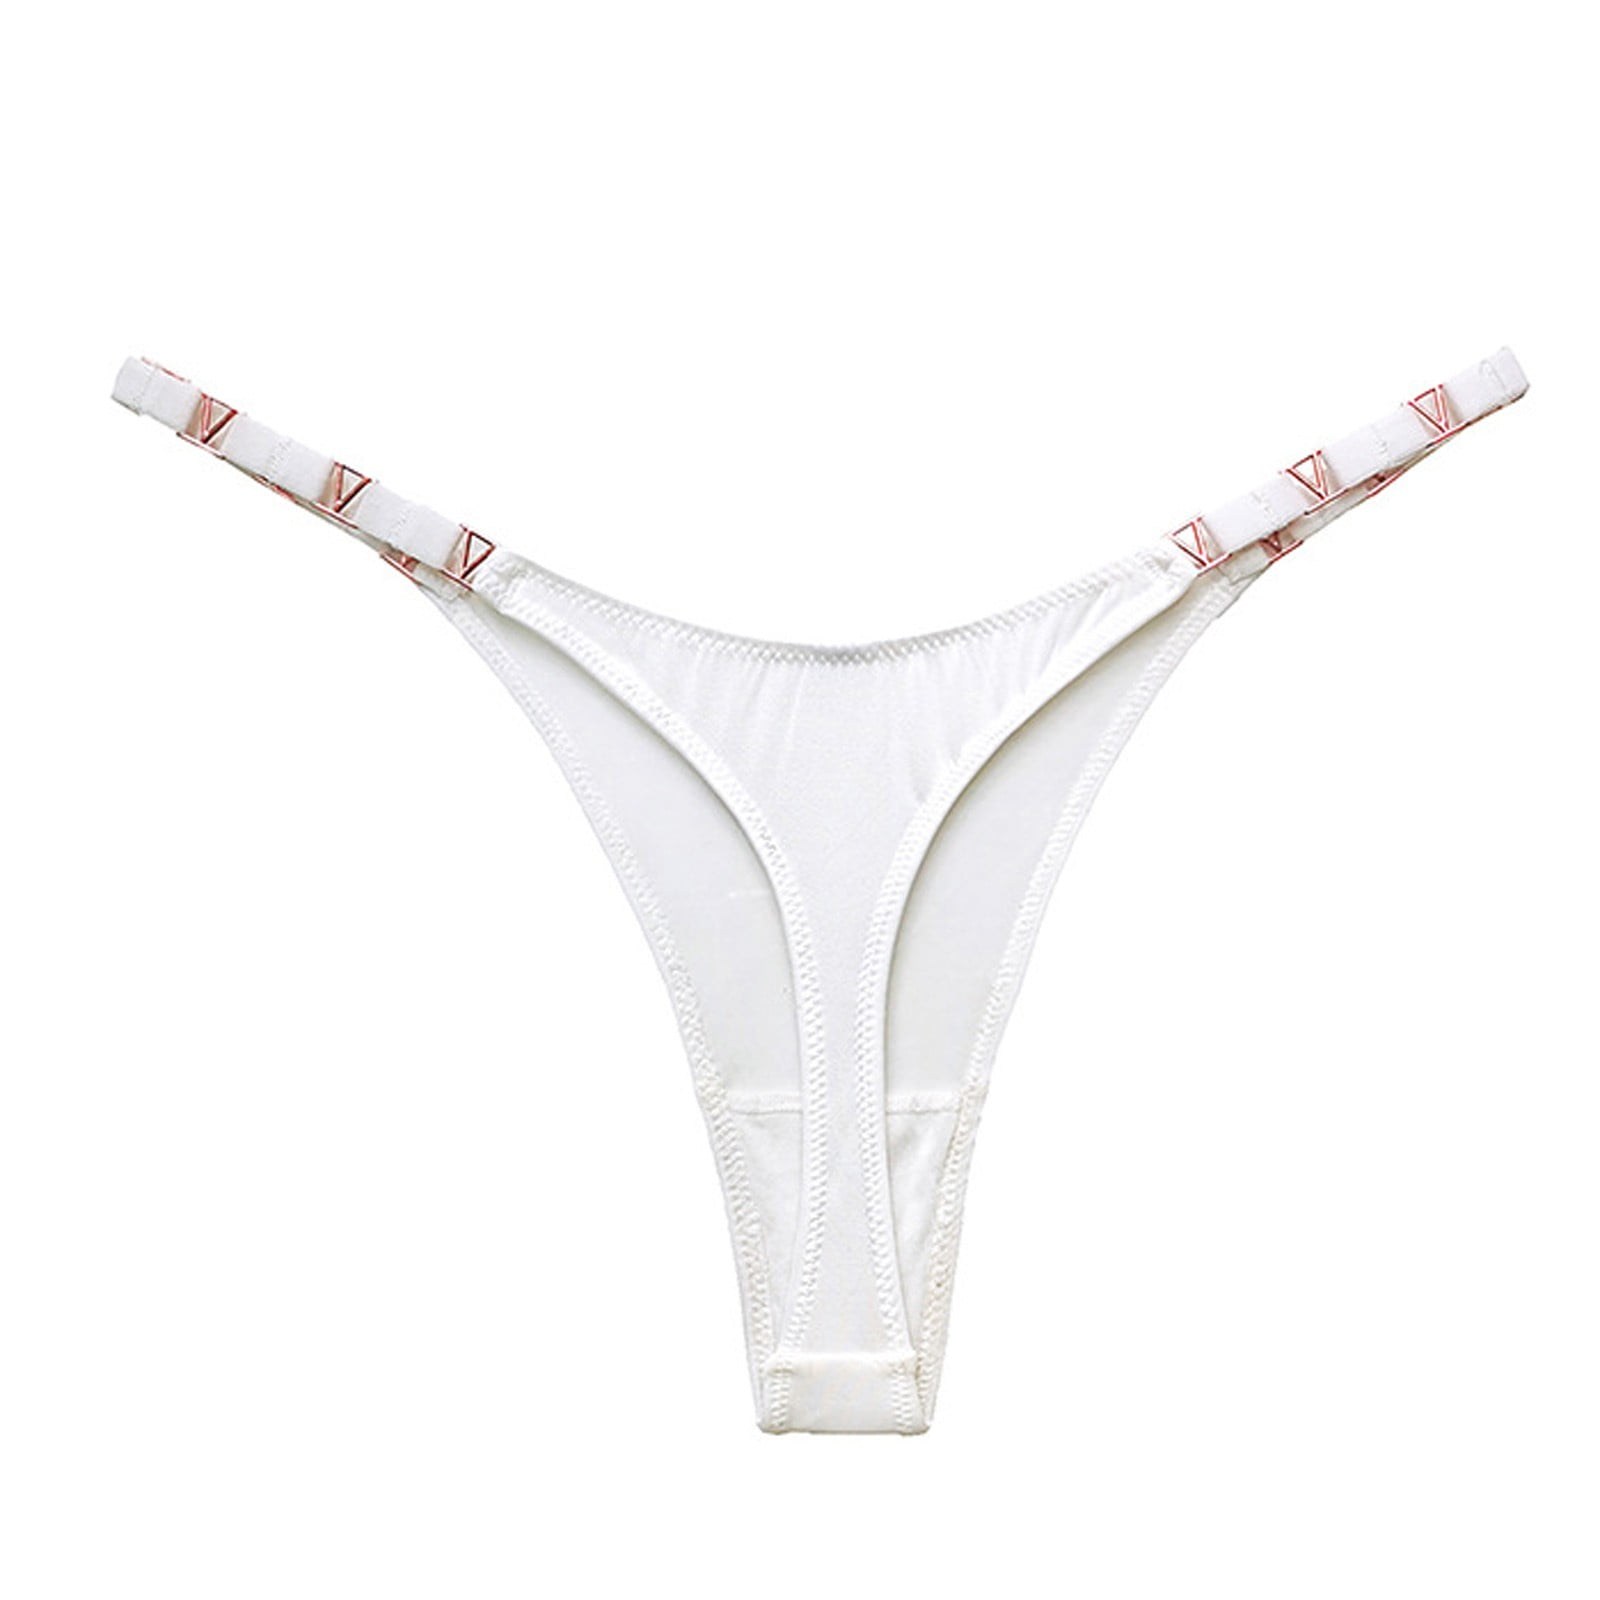 QWERTYU G String Thongs for Women Low Rise Panties Sexy Underwear Hot Pink L